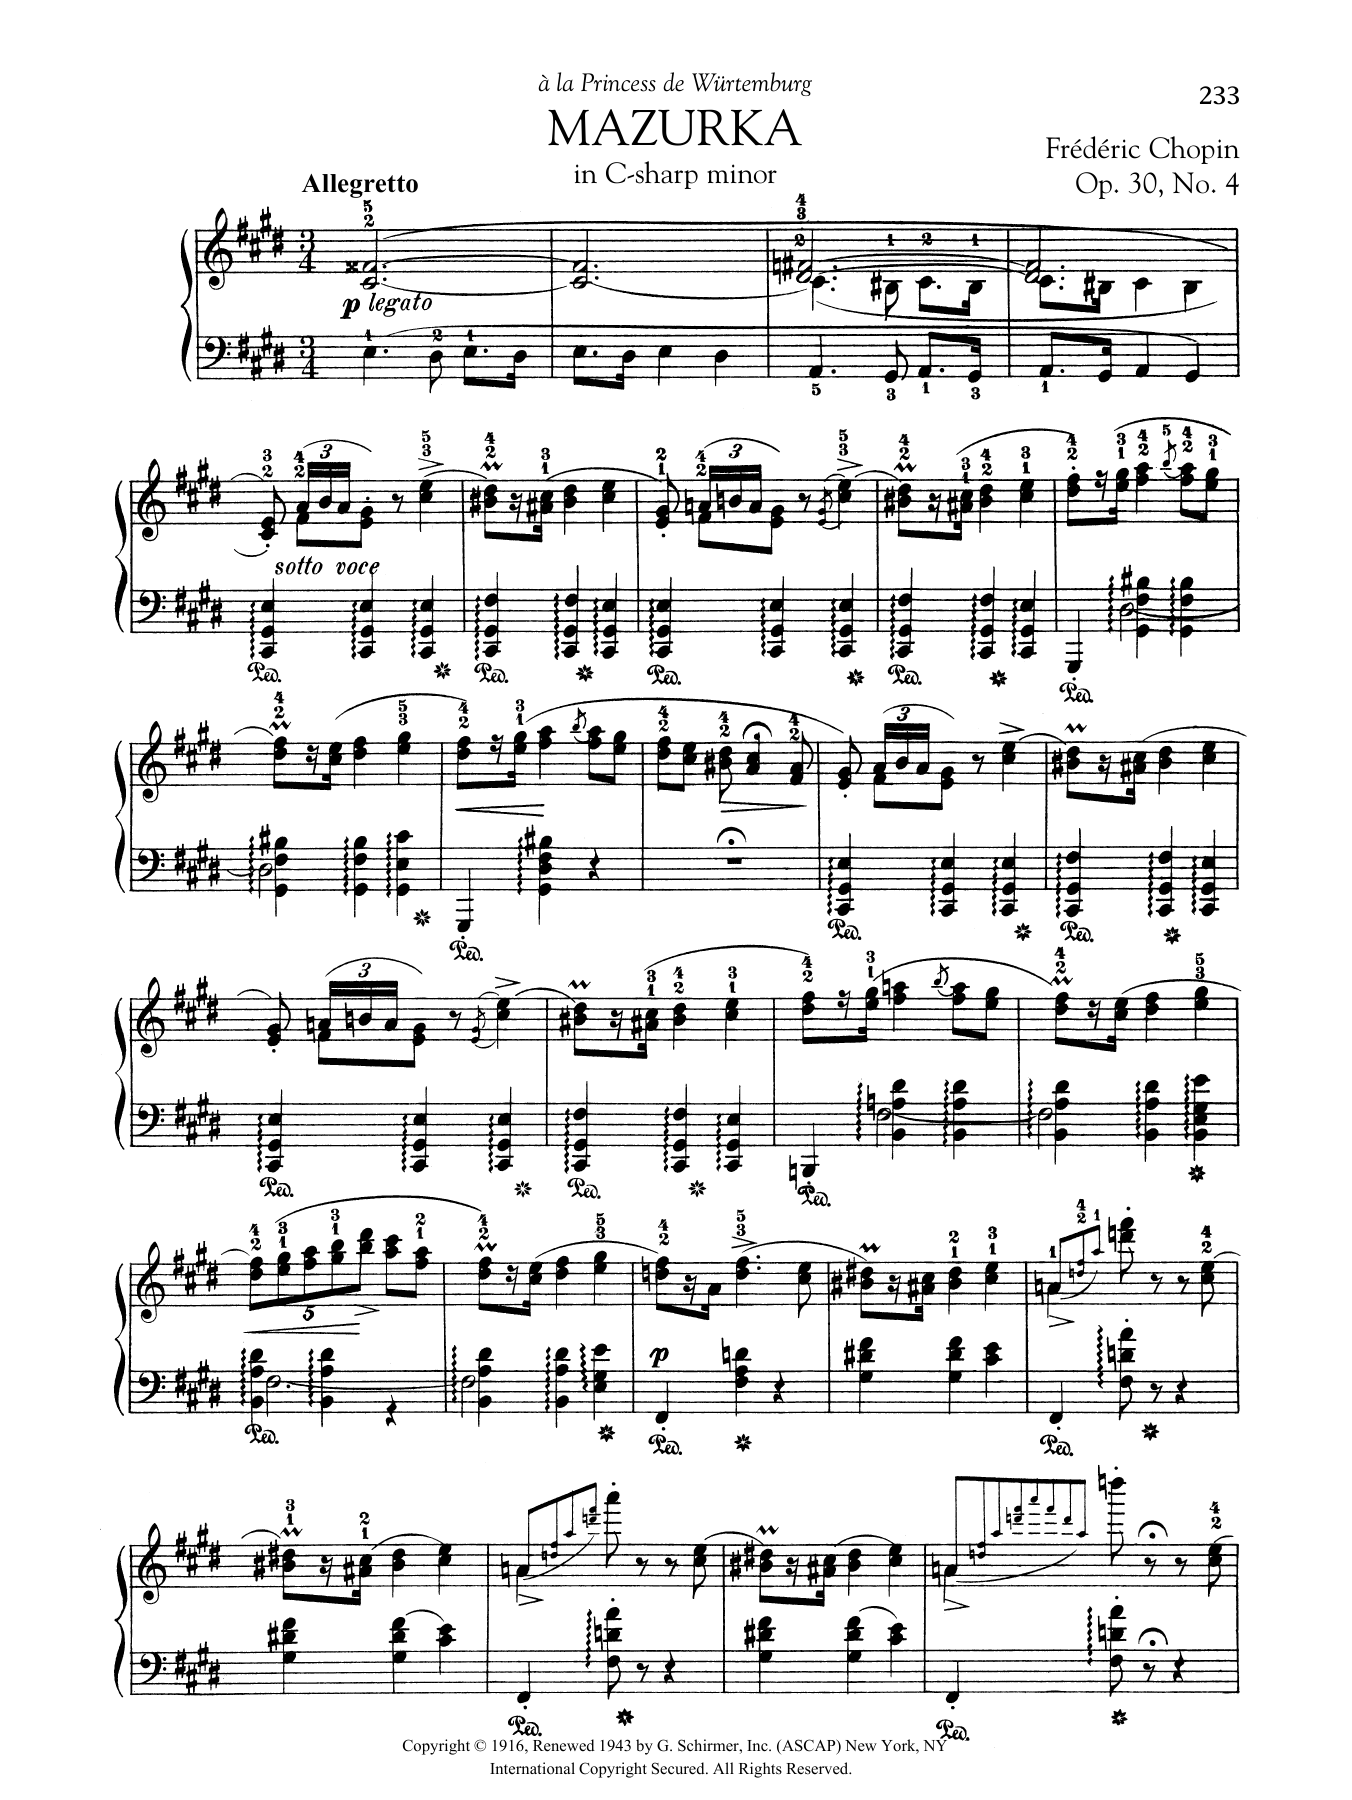 Mazurka in C-sharp minor, Op. 30, No. 4 sheet music